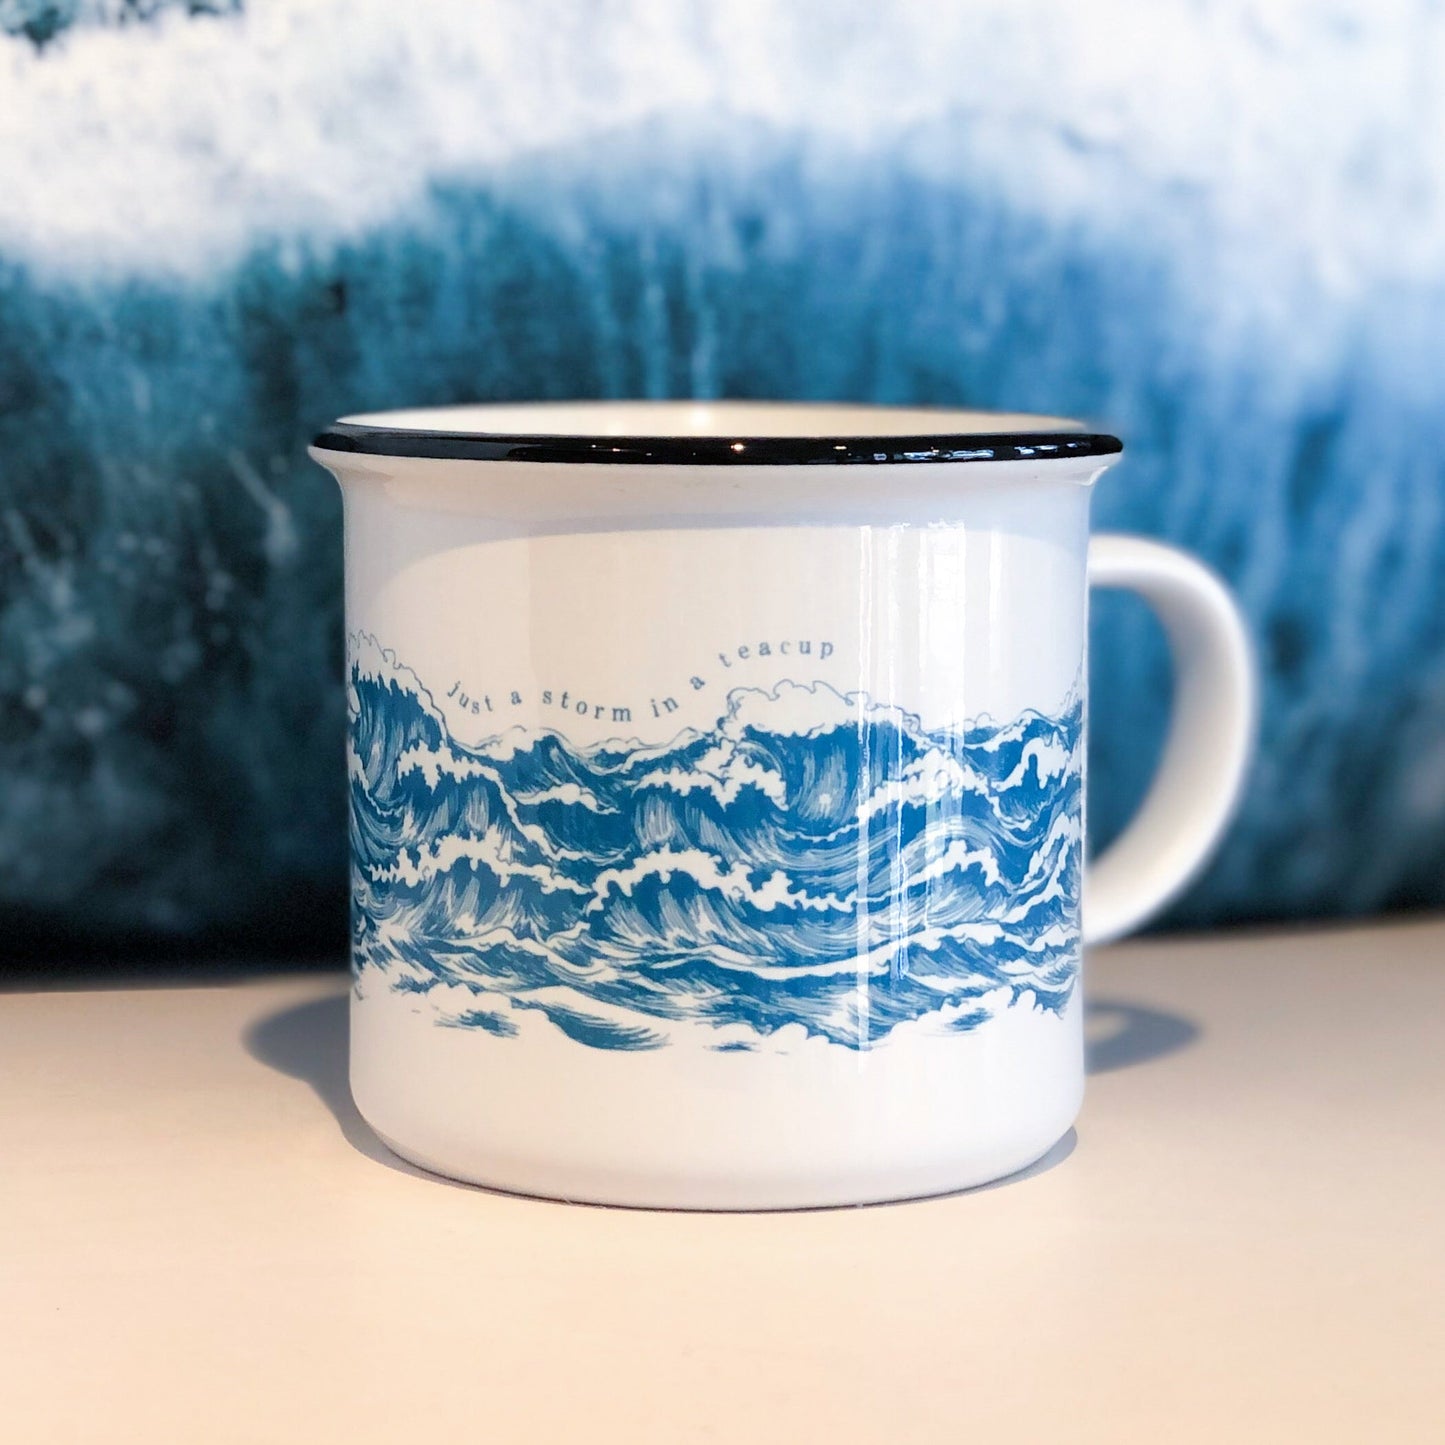 'Just a Storm in a Teacup' Ceramic Mug